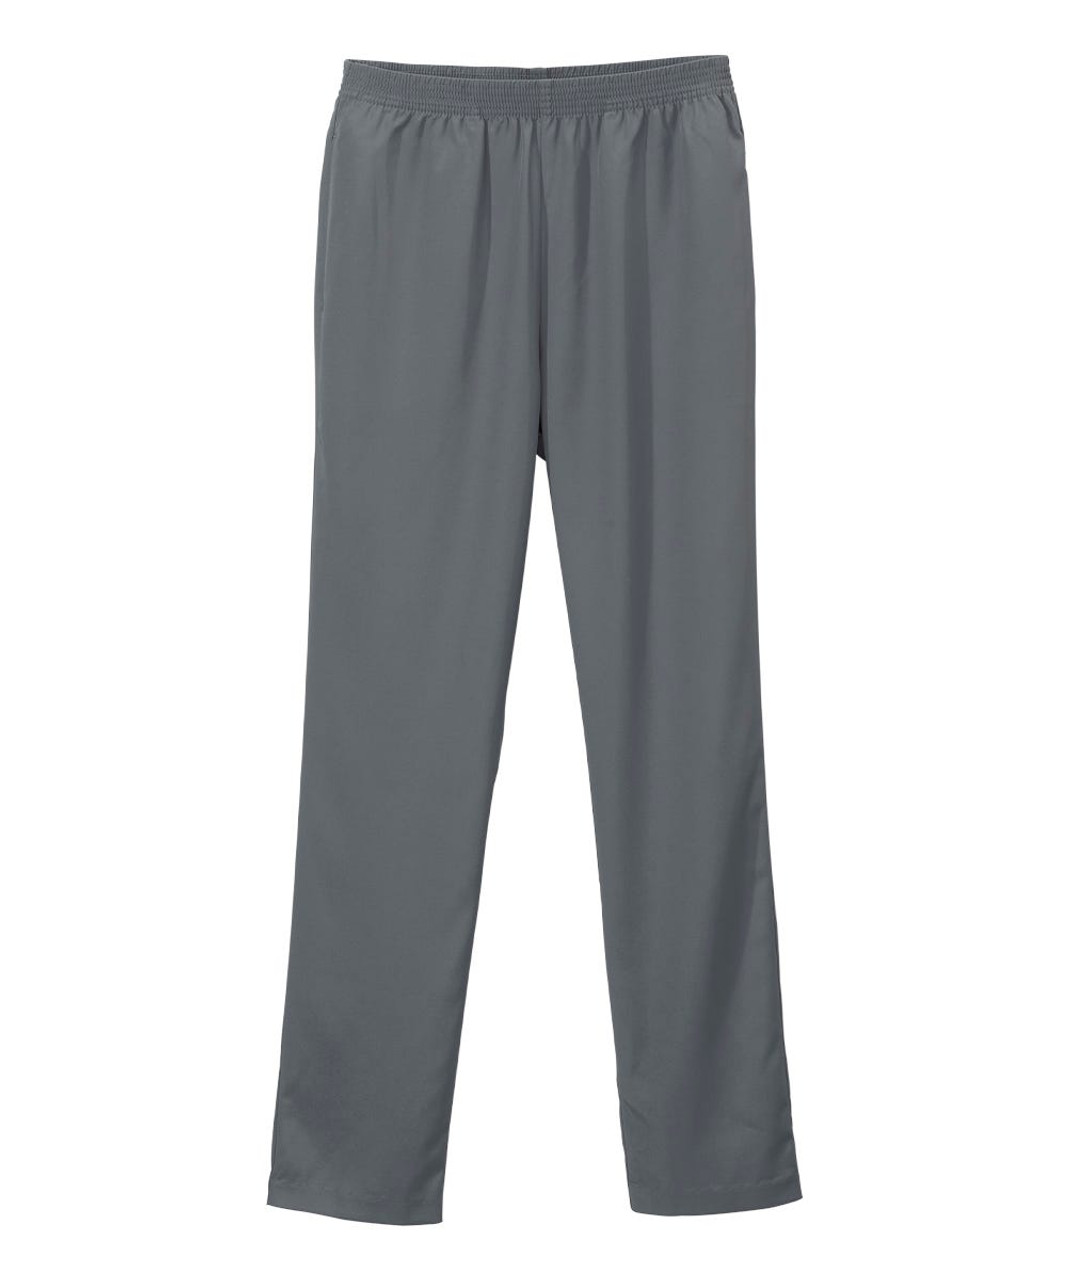 Silverts SV13090 Senior Women's Pull-on Gabardine Pant - Elastic Waist Pants for Women Condor Grey, Size=38, SV13090-CGW-38